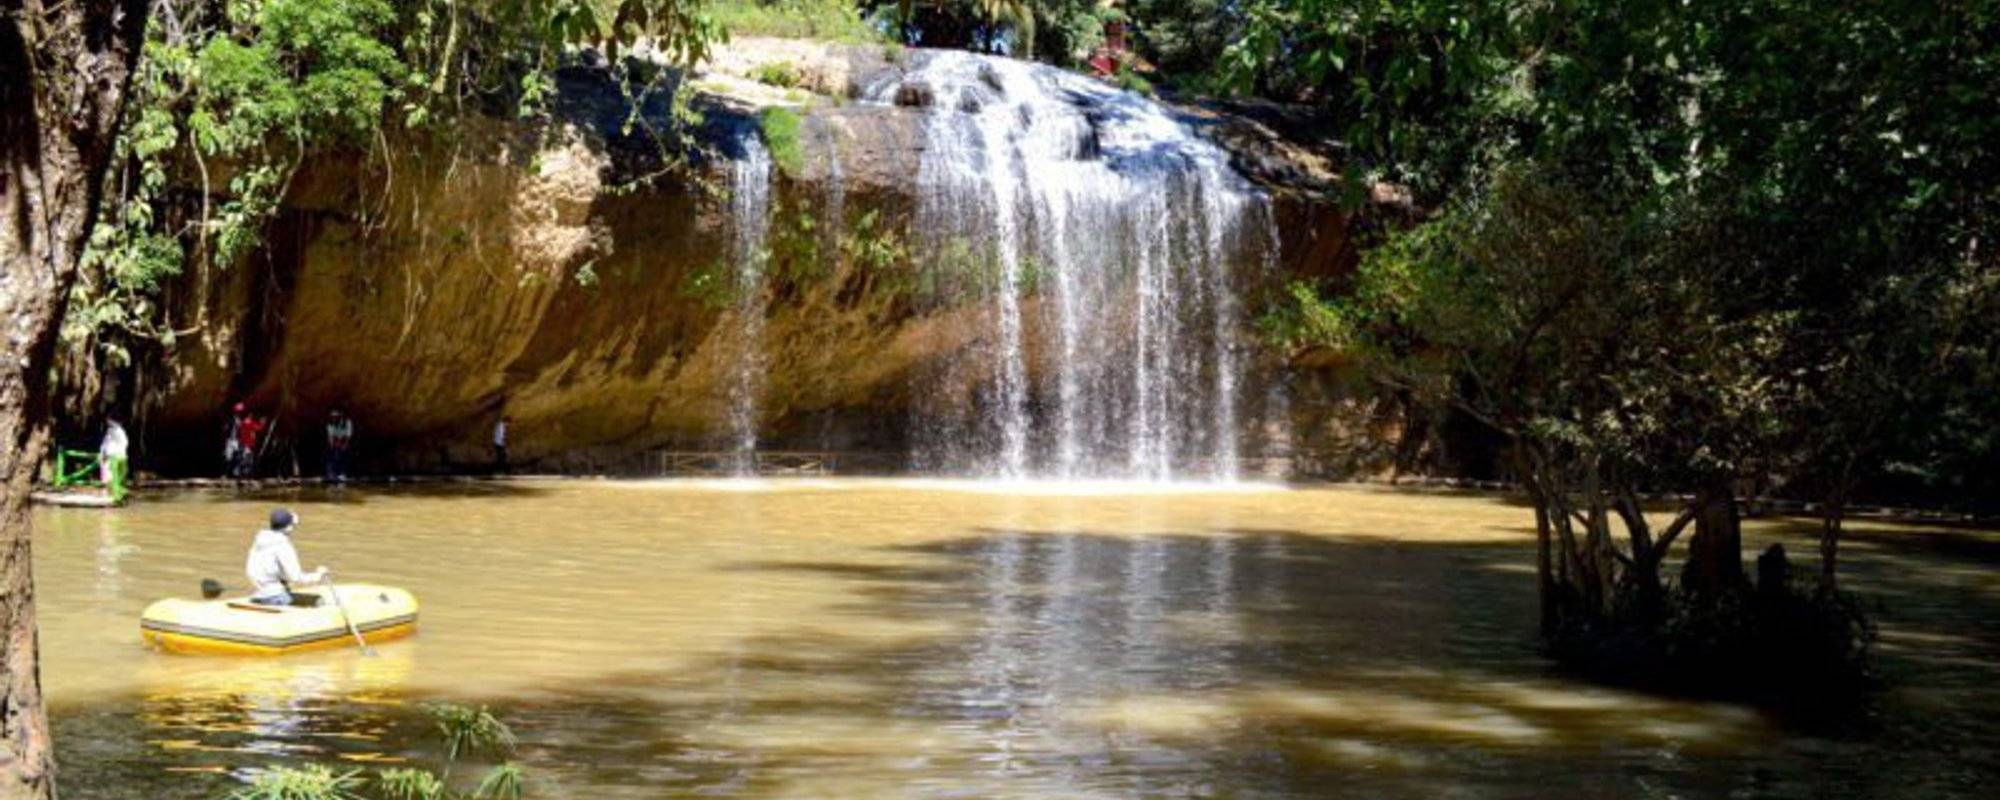 Prenn Waterfall in Dalat Vietnam